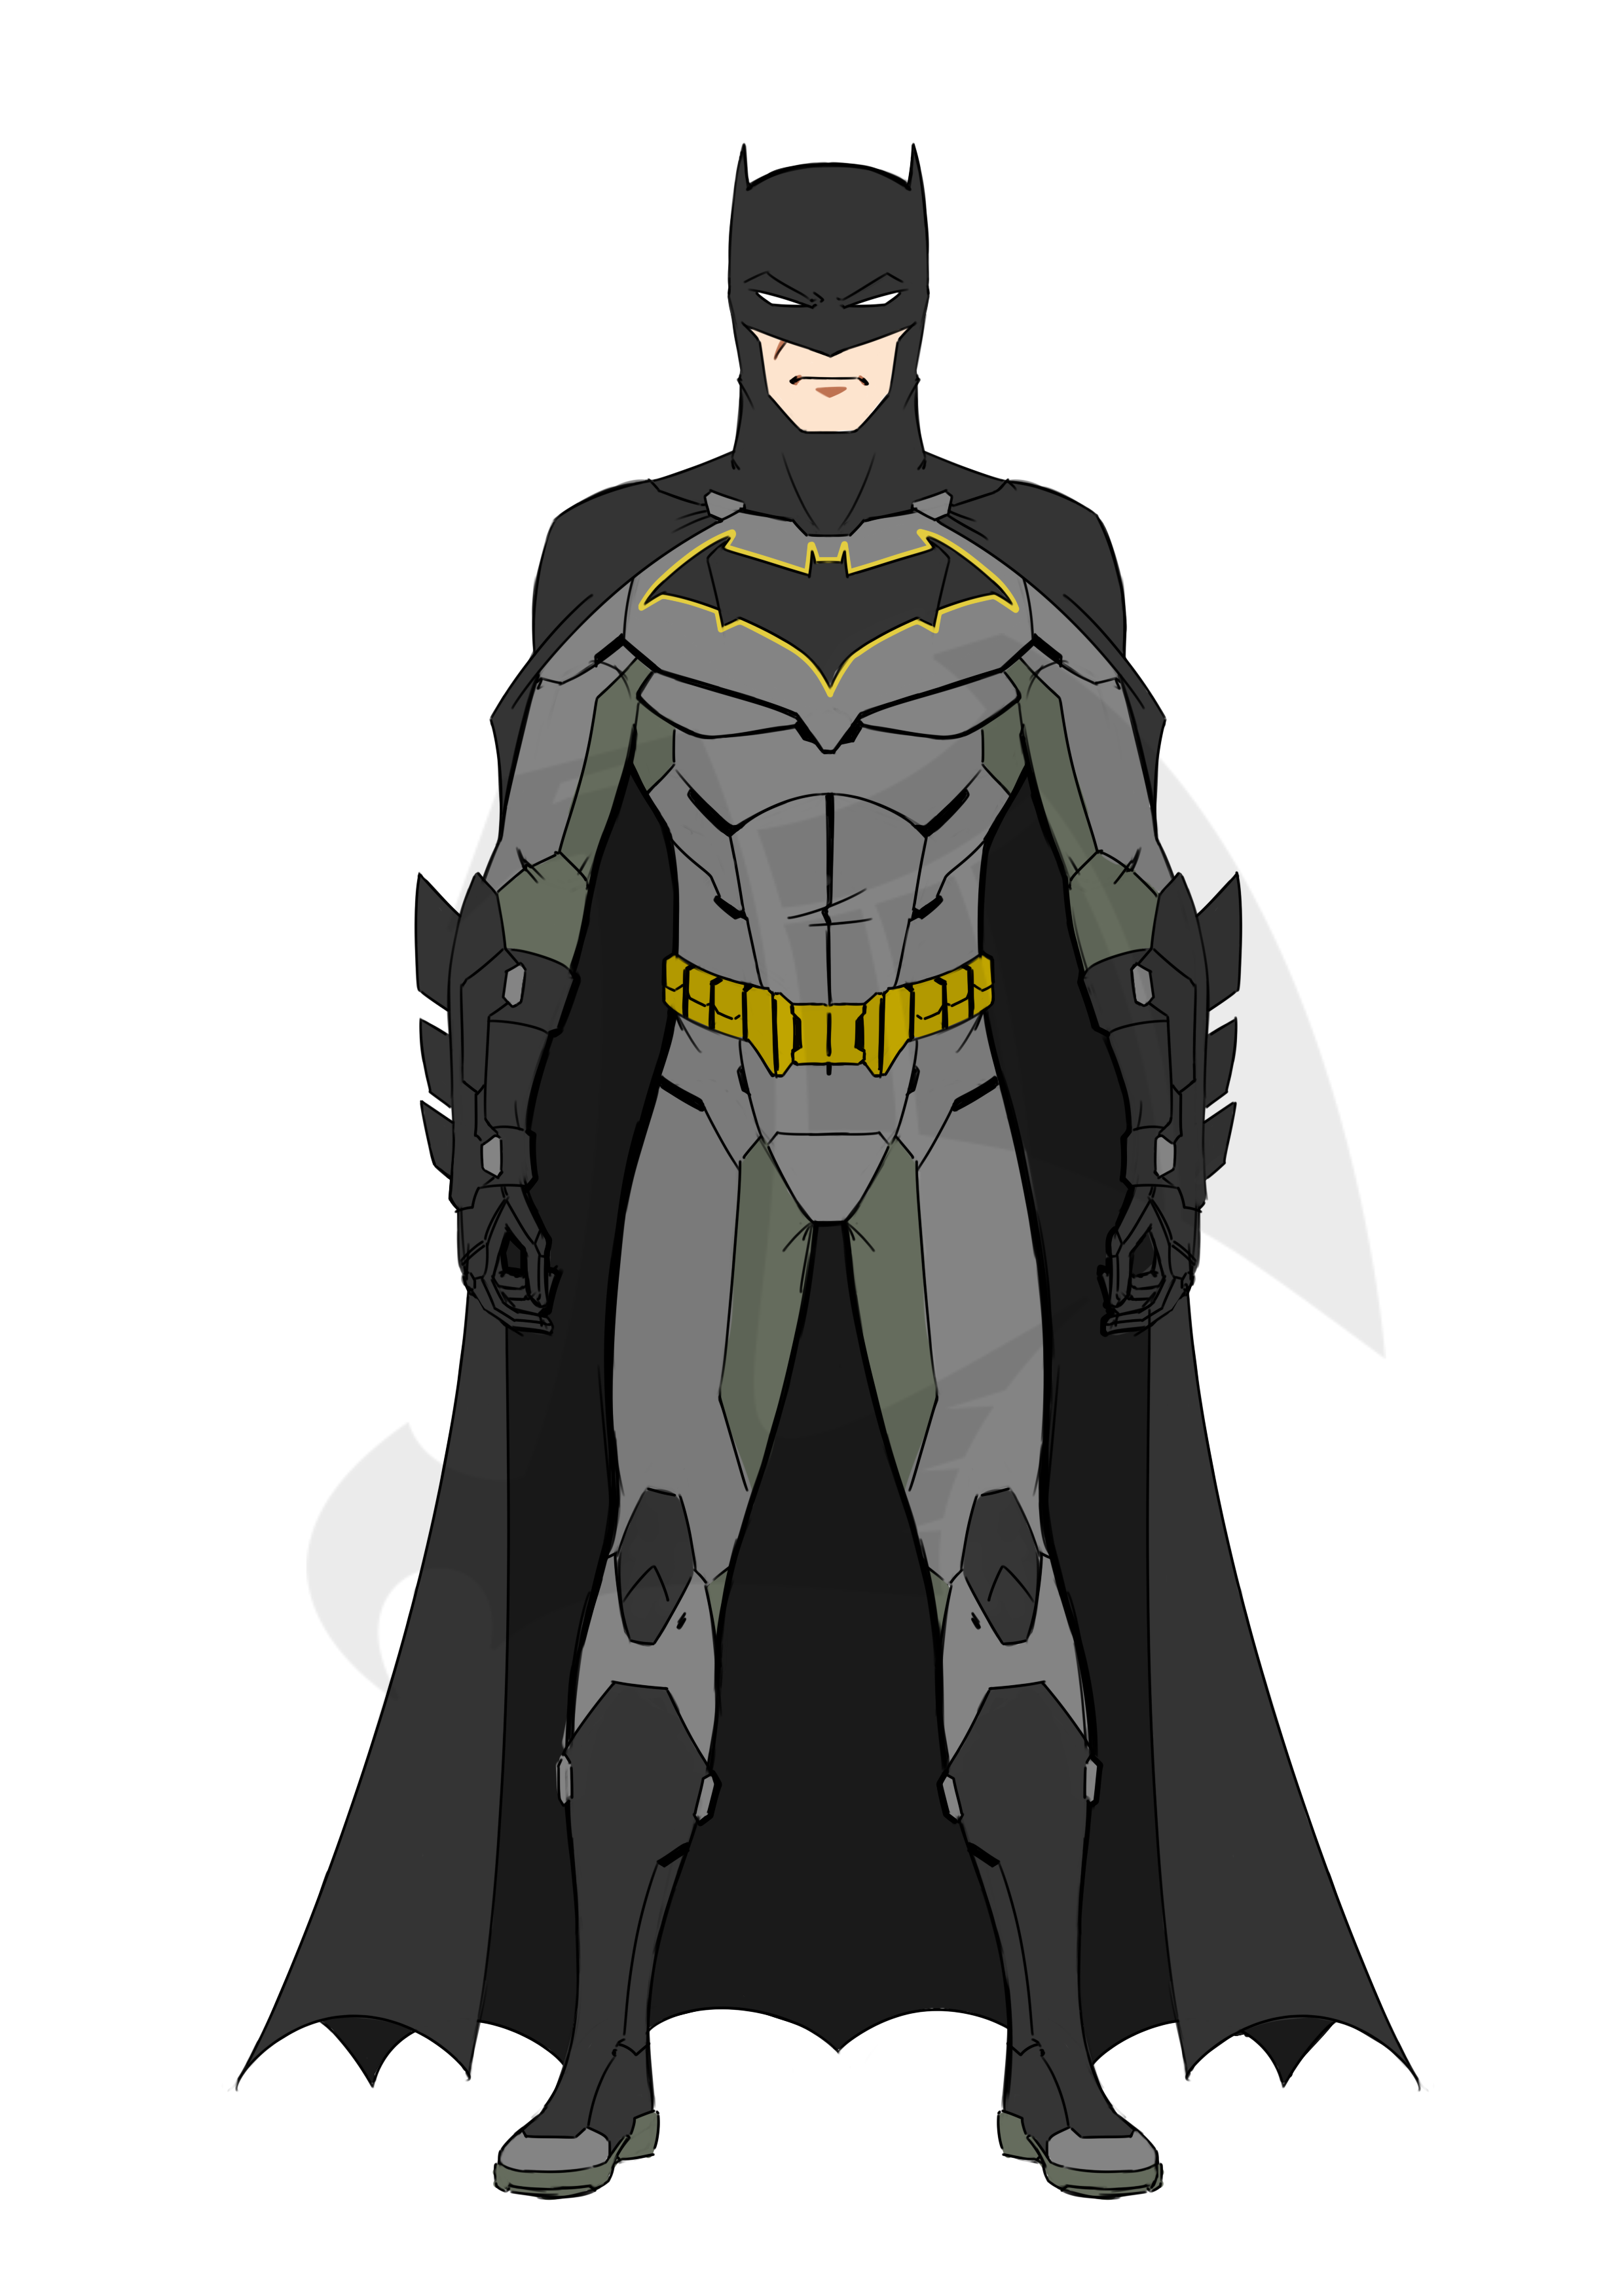 The Batman - Rebirth by TakarinaTLD93 on DeviantArt